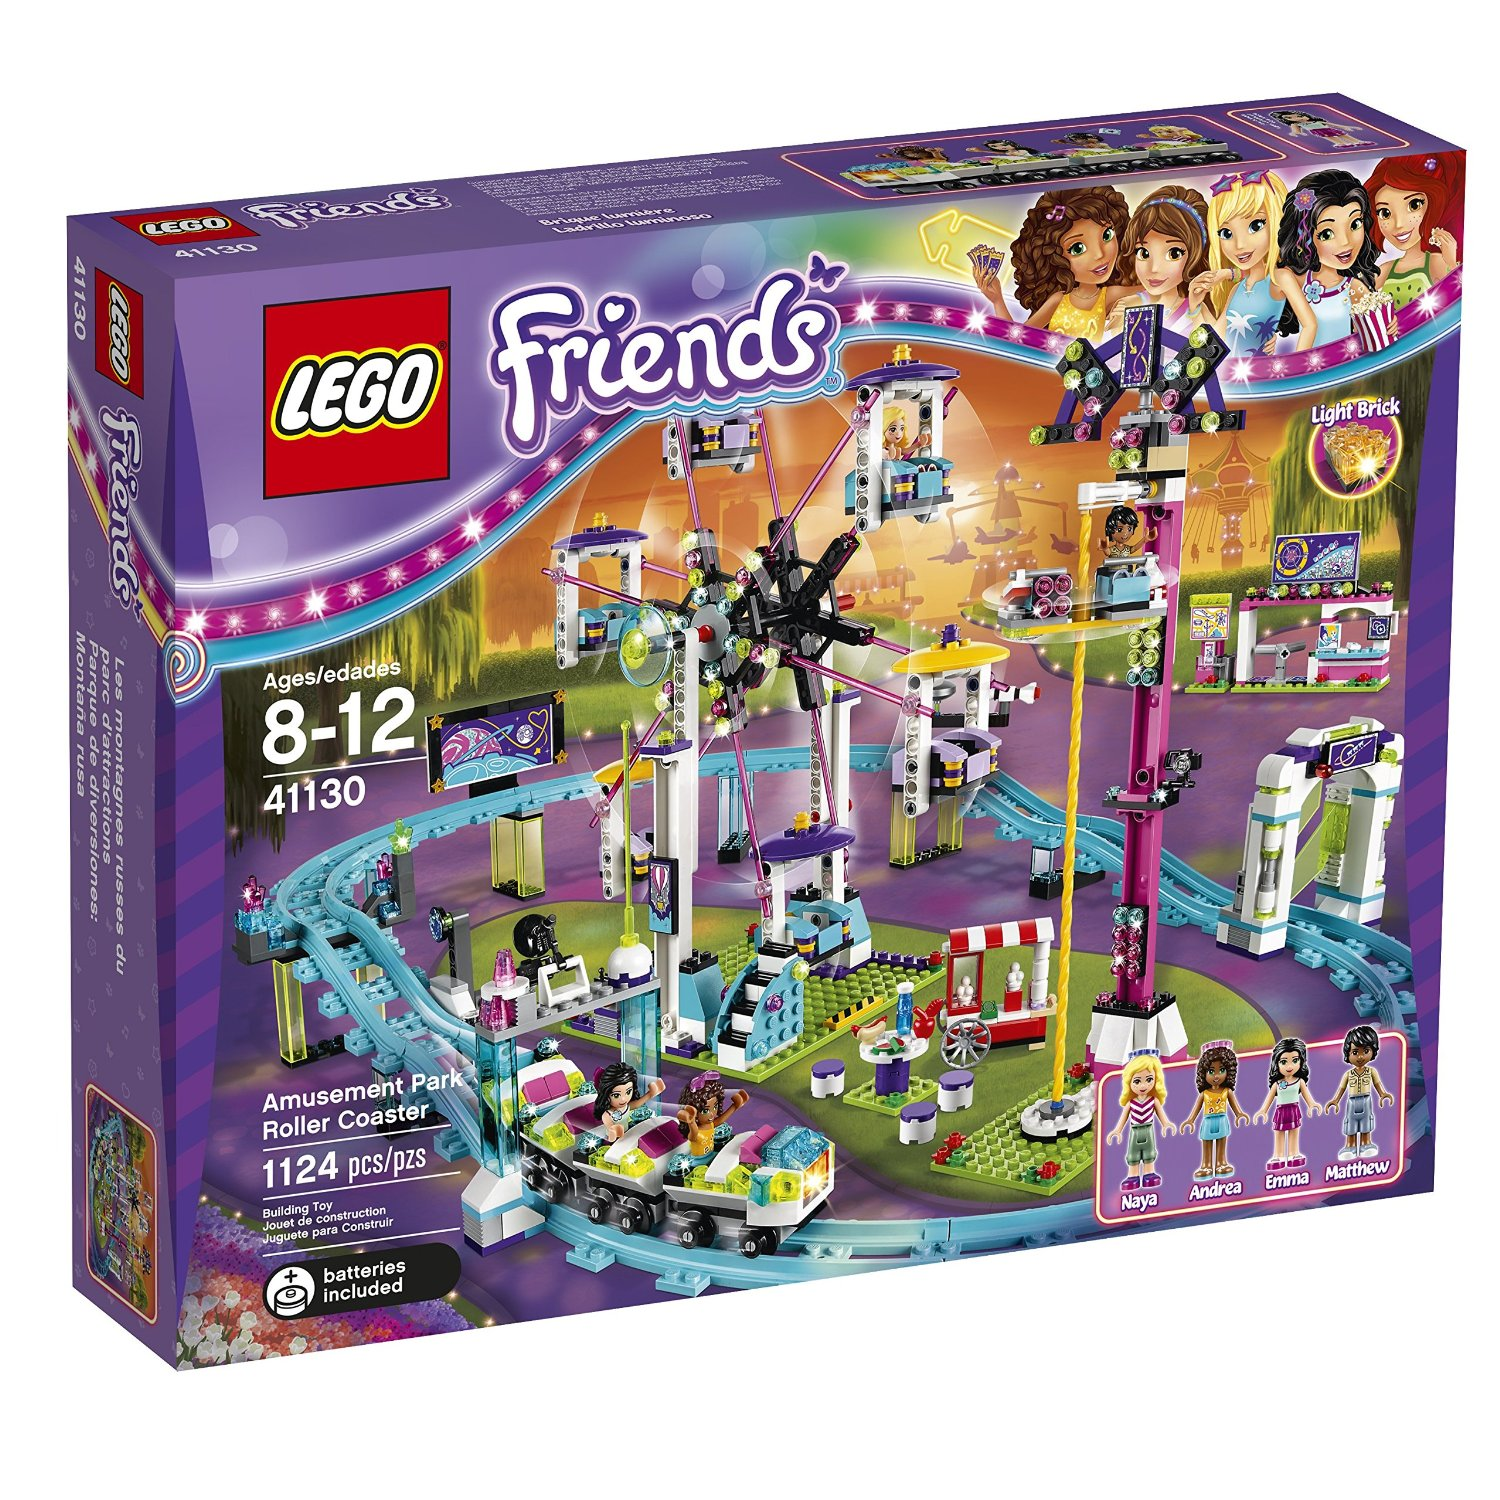 LEGO Friends 41130 Amusement Park Roller Coaster Building Kit Only $71.14! (Reg $99.99)